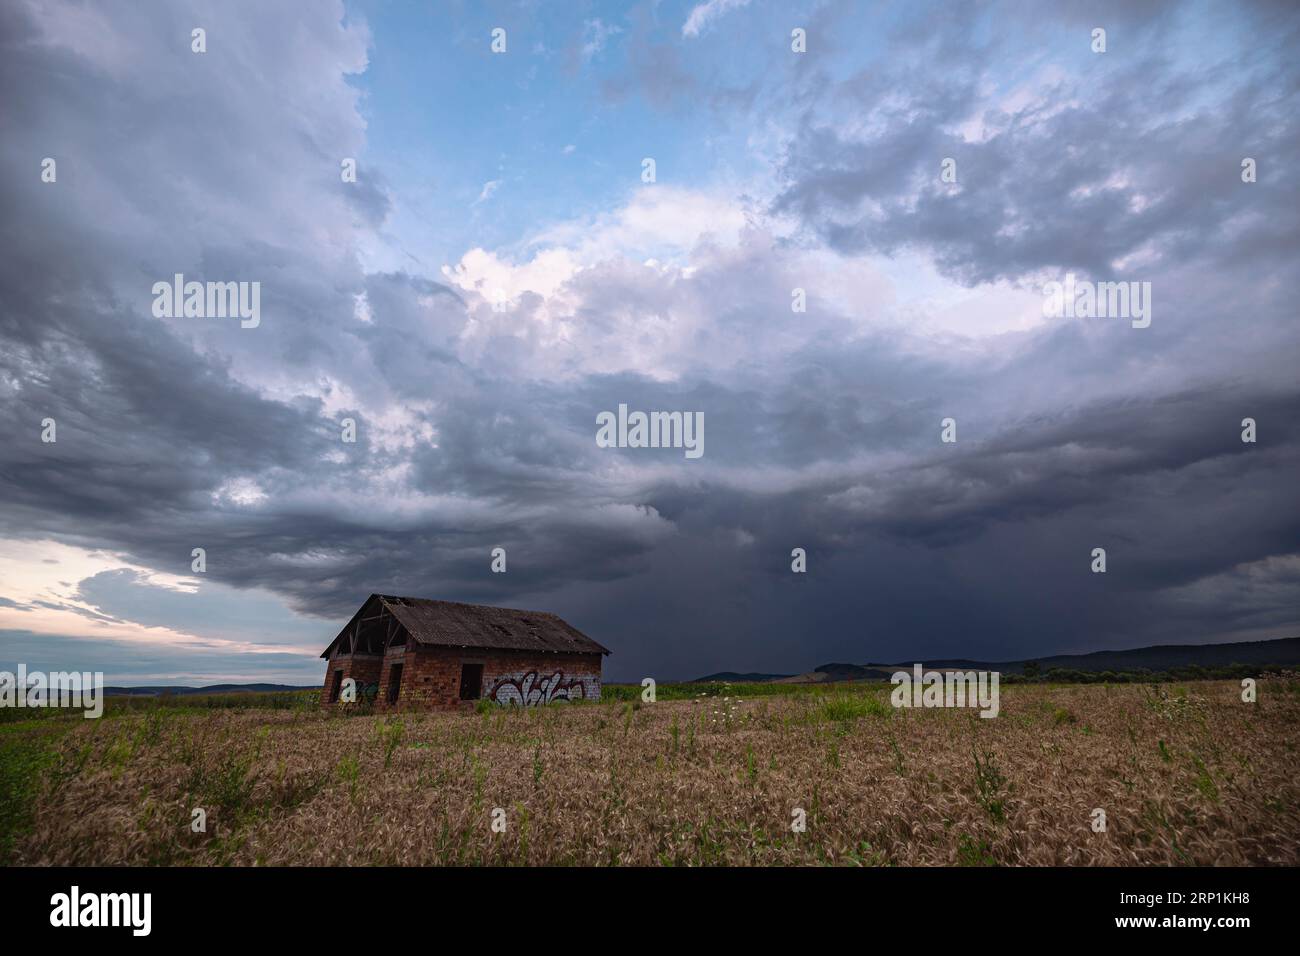 Dramatic looking Cumulonimbus storm cloud over the countryside of Transylvania. Stock Photo